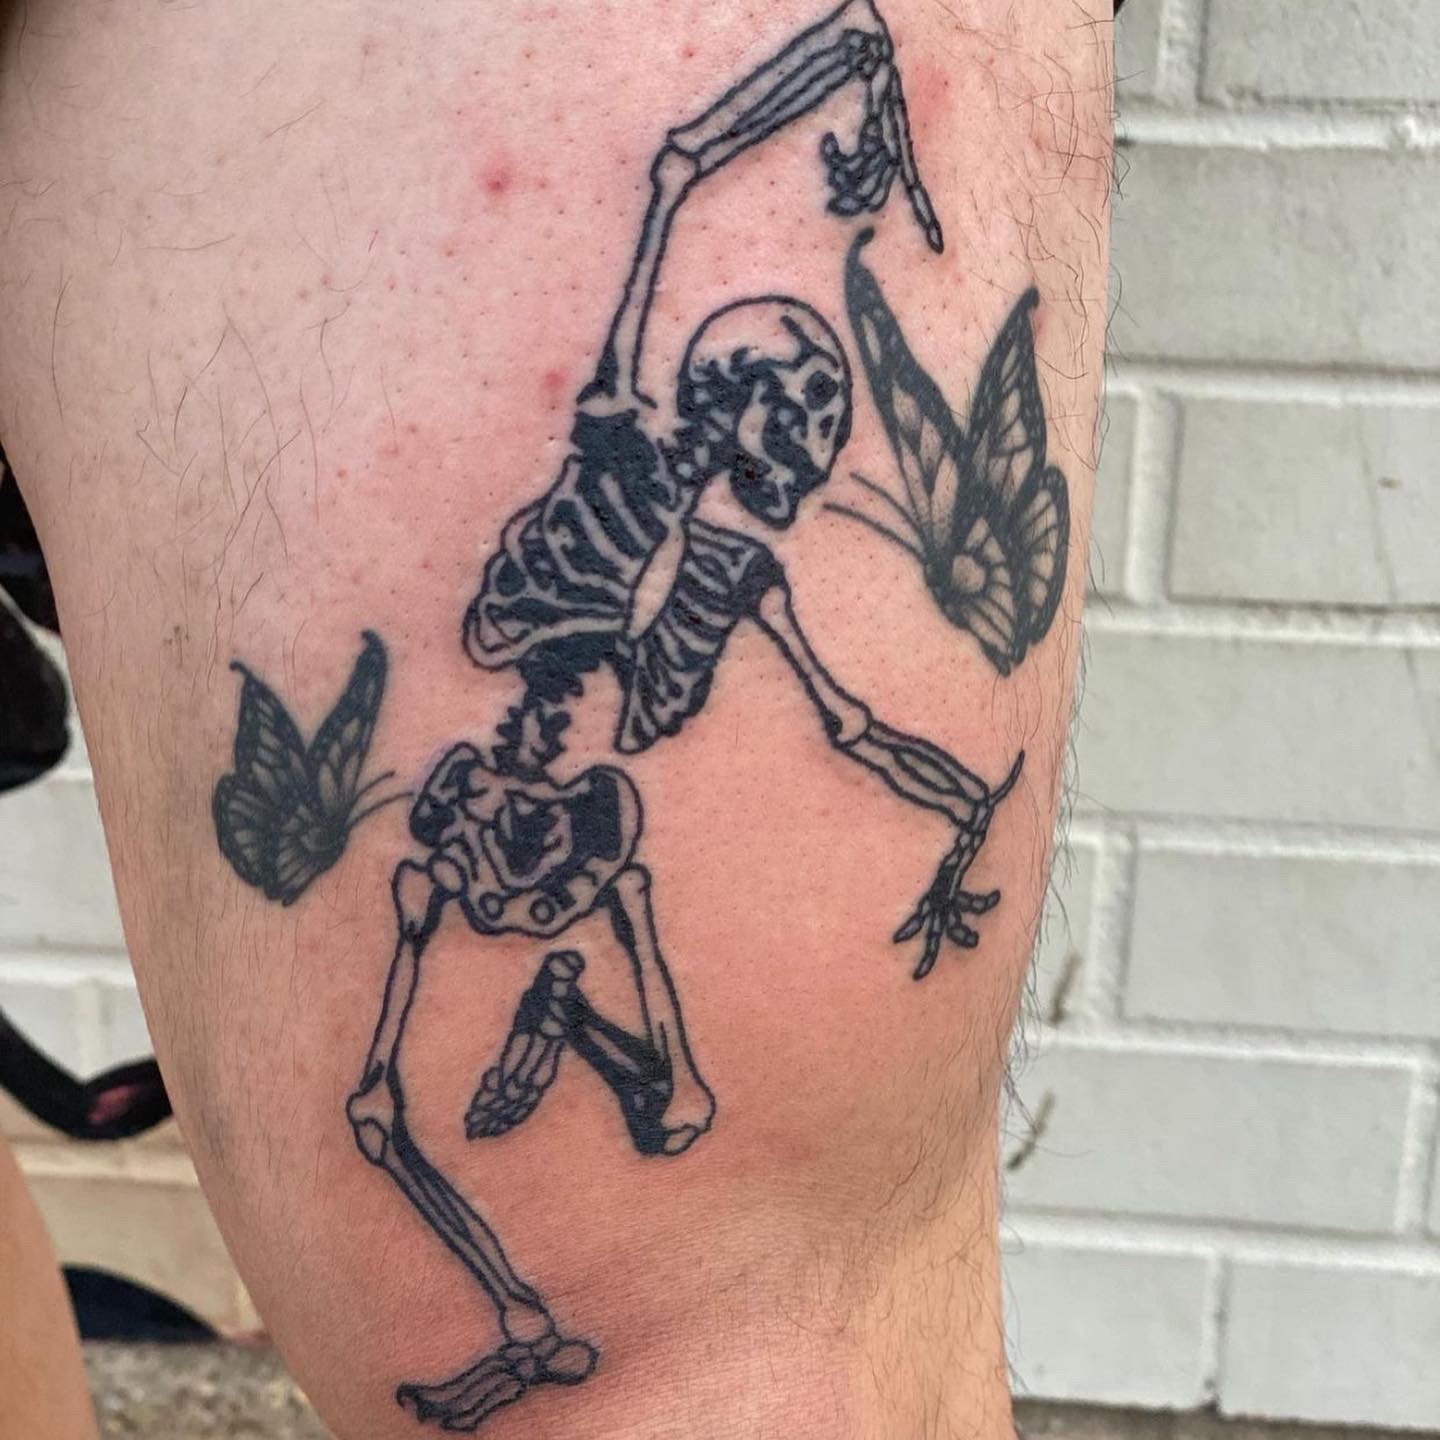 tattoo of a skeleton on a man's leg